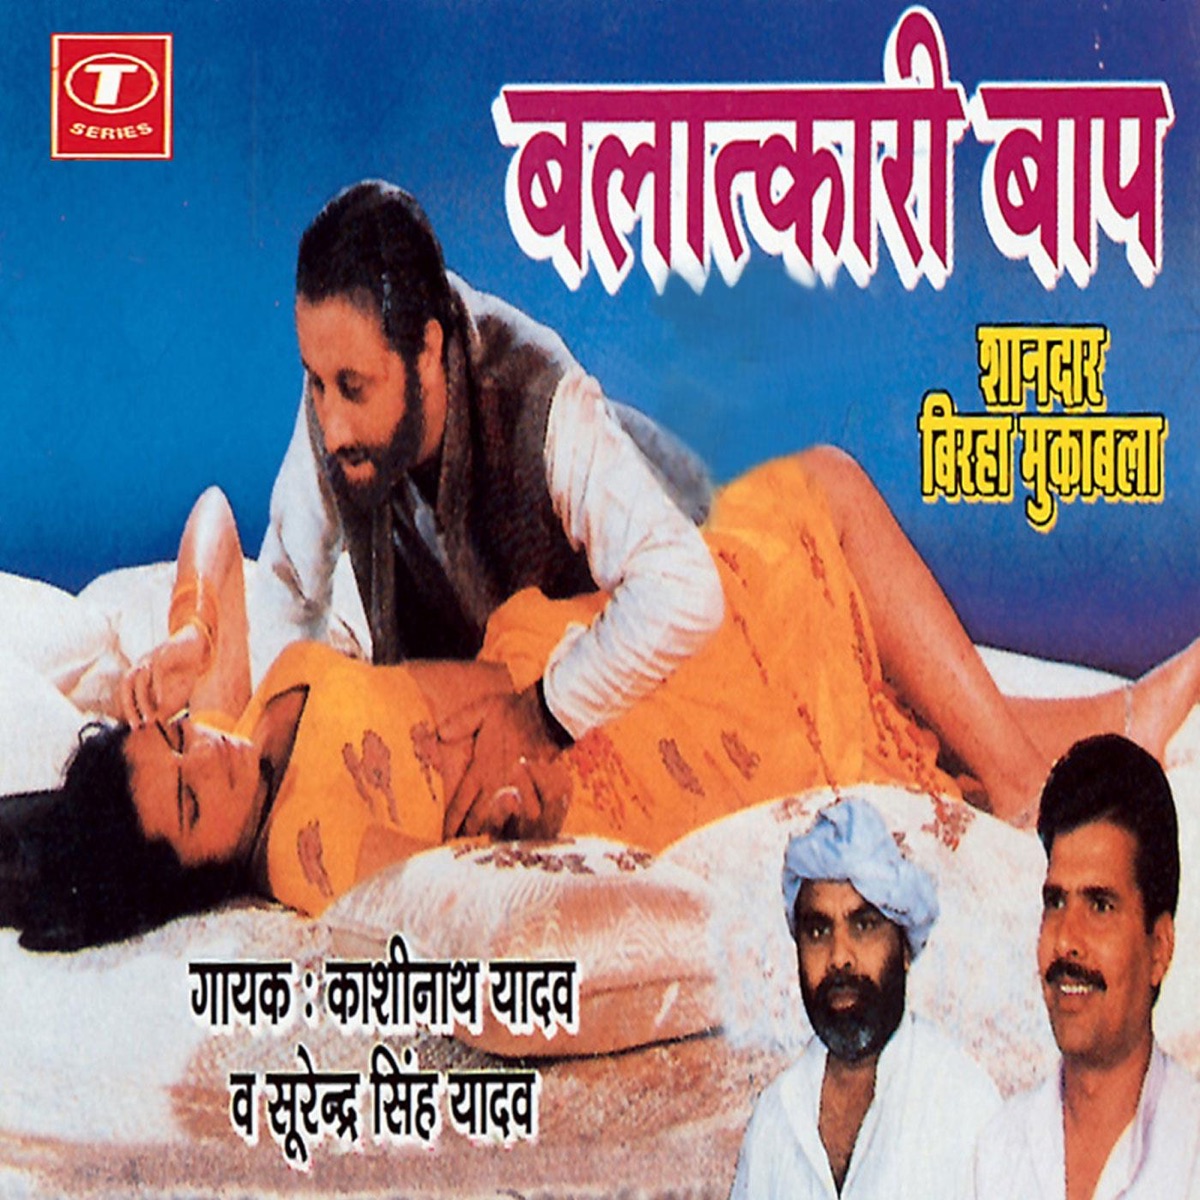 Balatkari film